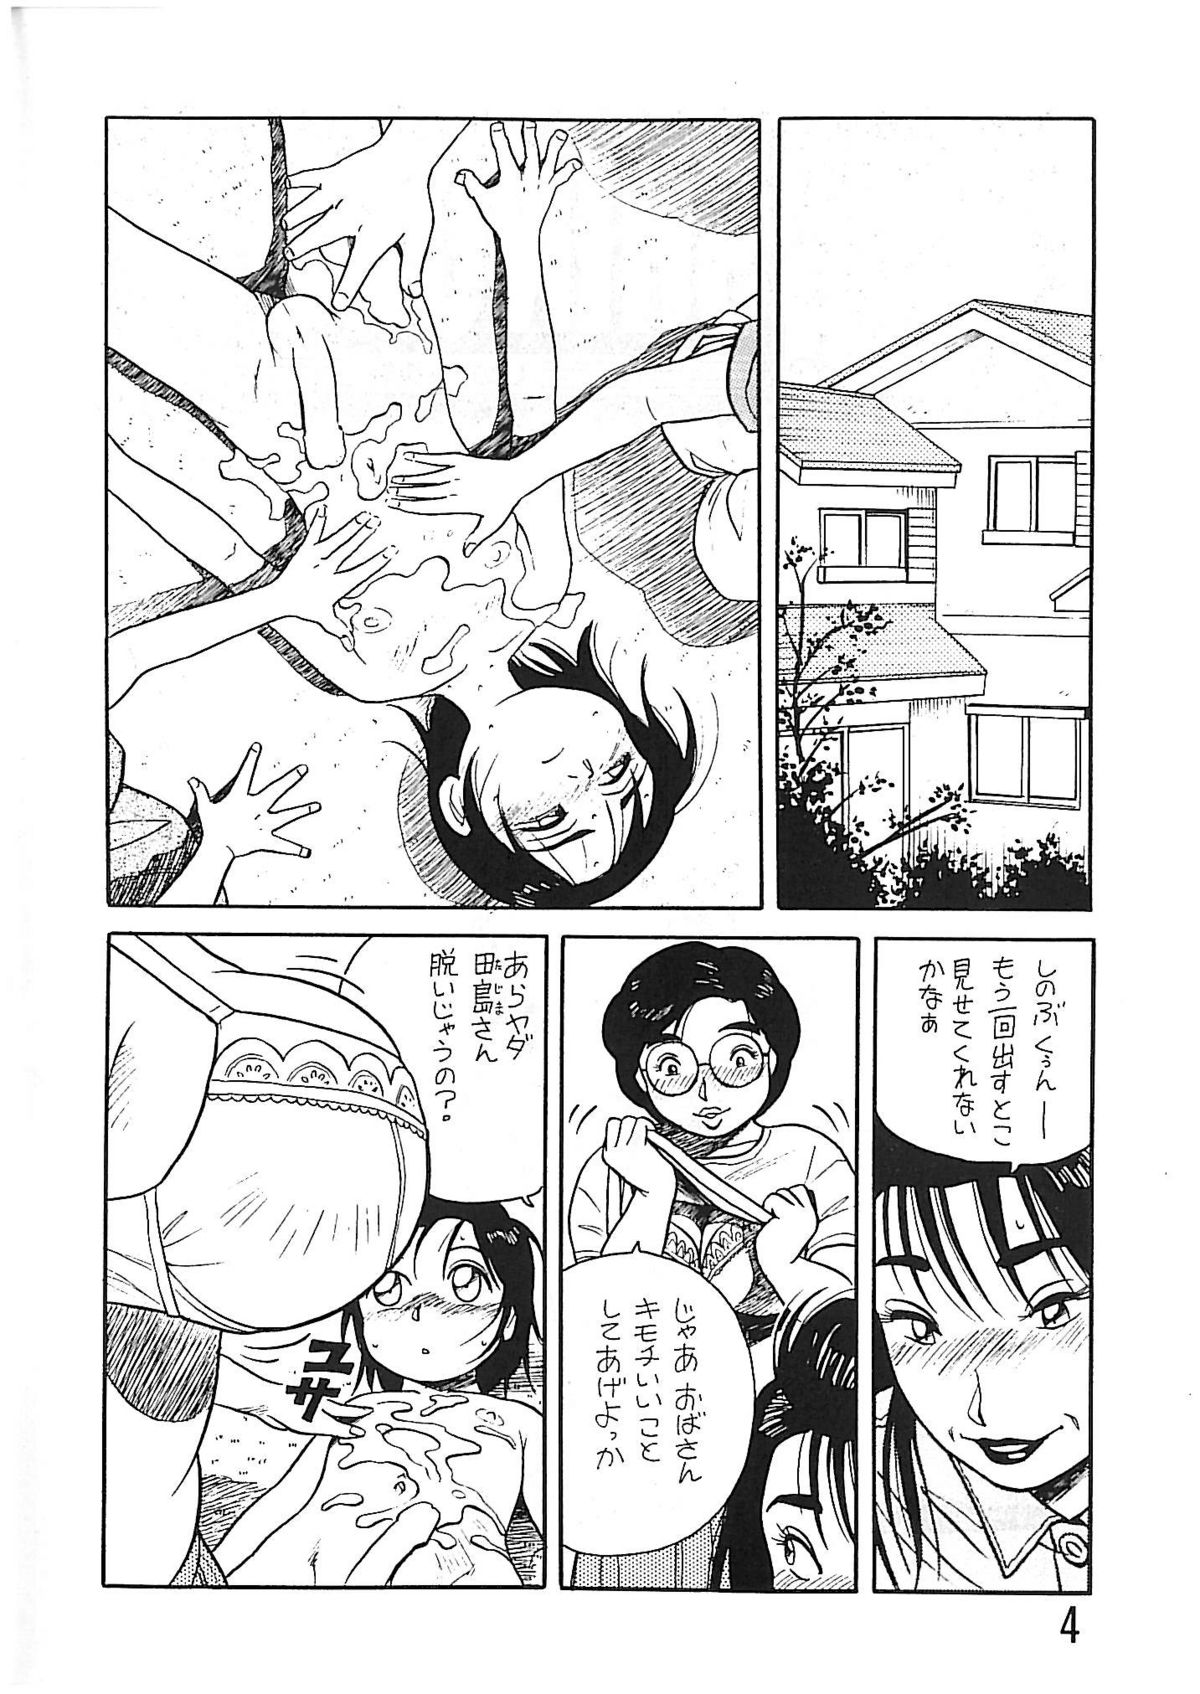 [NEW WORLD ORDER (Anda Daichi)] BOY'S LIFE CORE 2 page 3 full